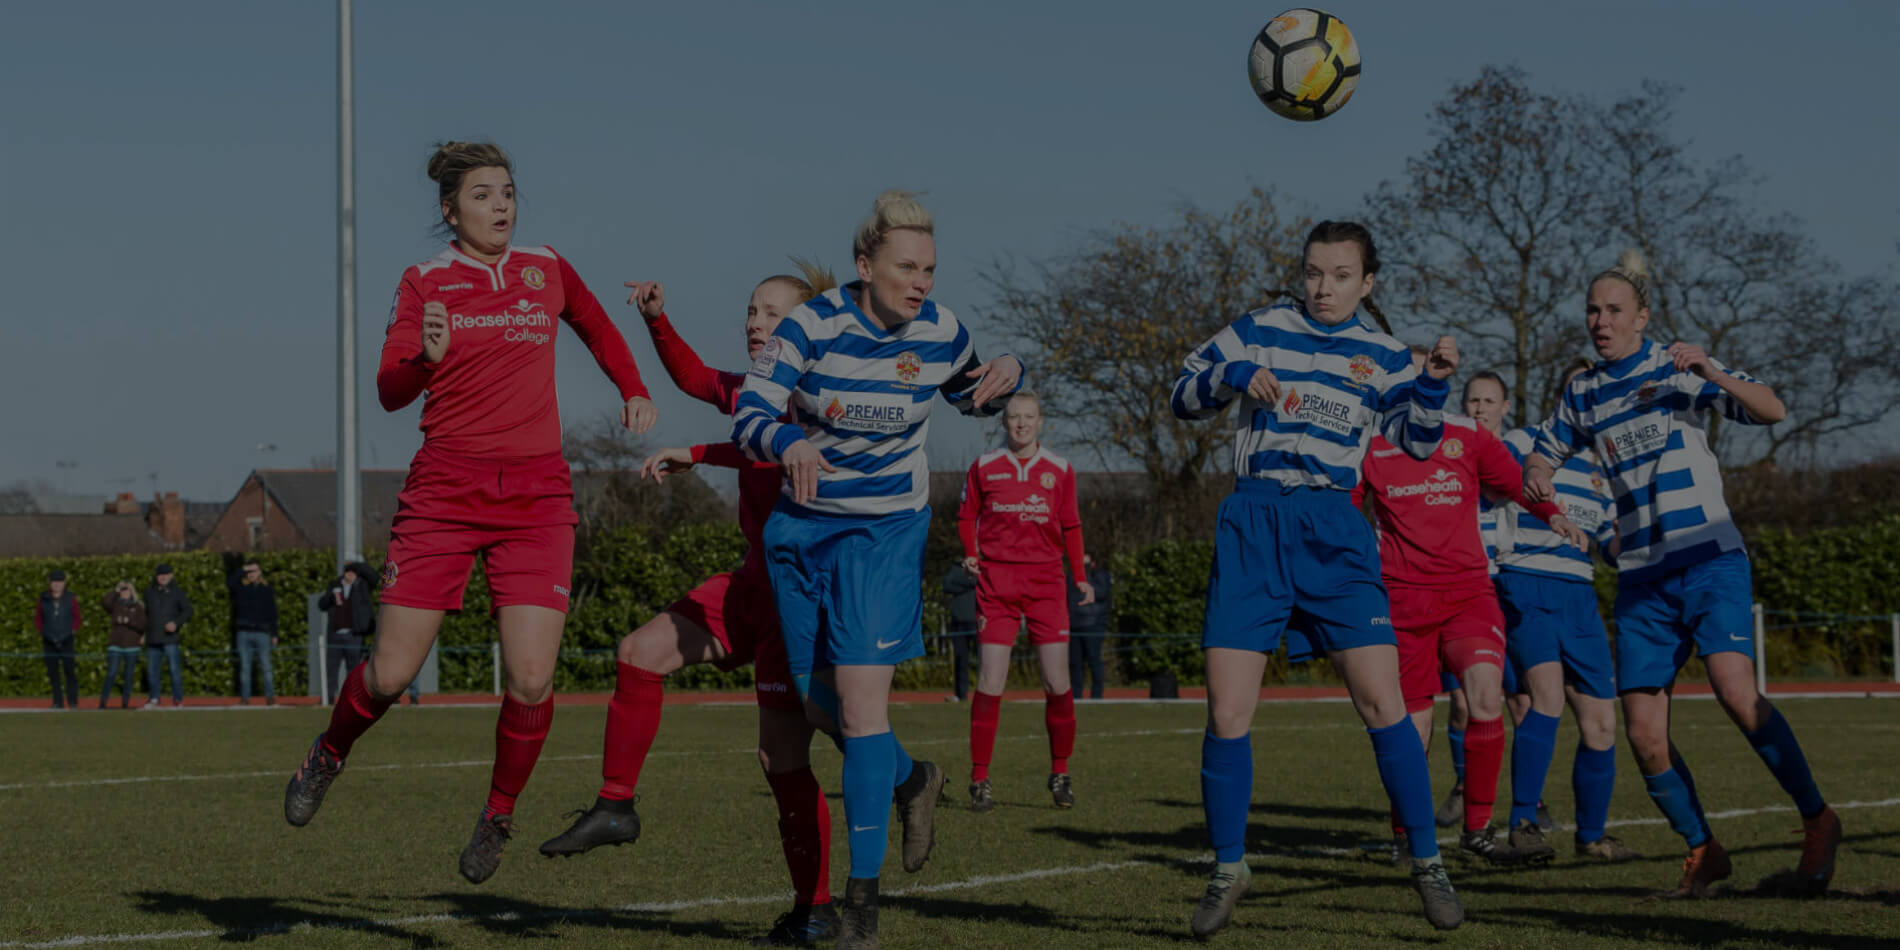 Cheshire Girls Football League